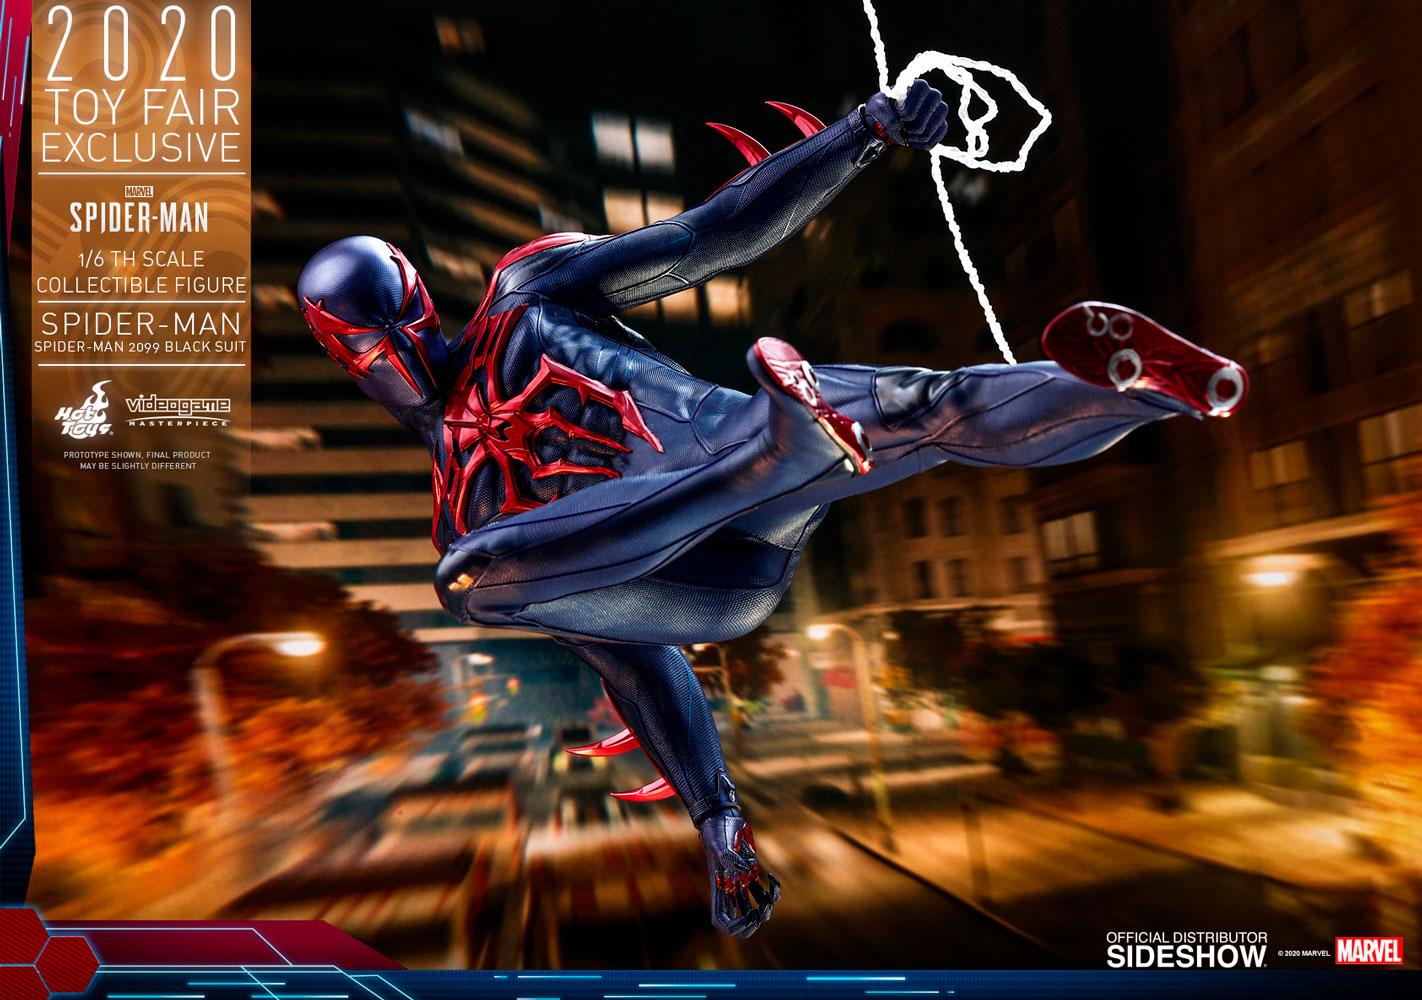 Spider-Man (Spider-Man 2099 Black Suit) Sixth Scale Exclusive Figure